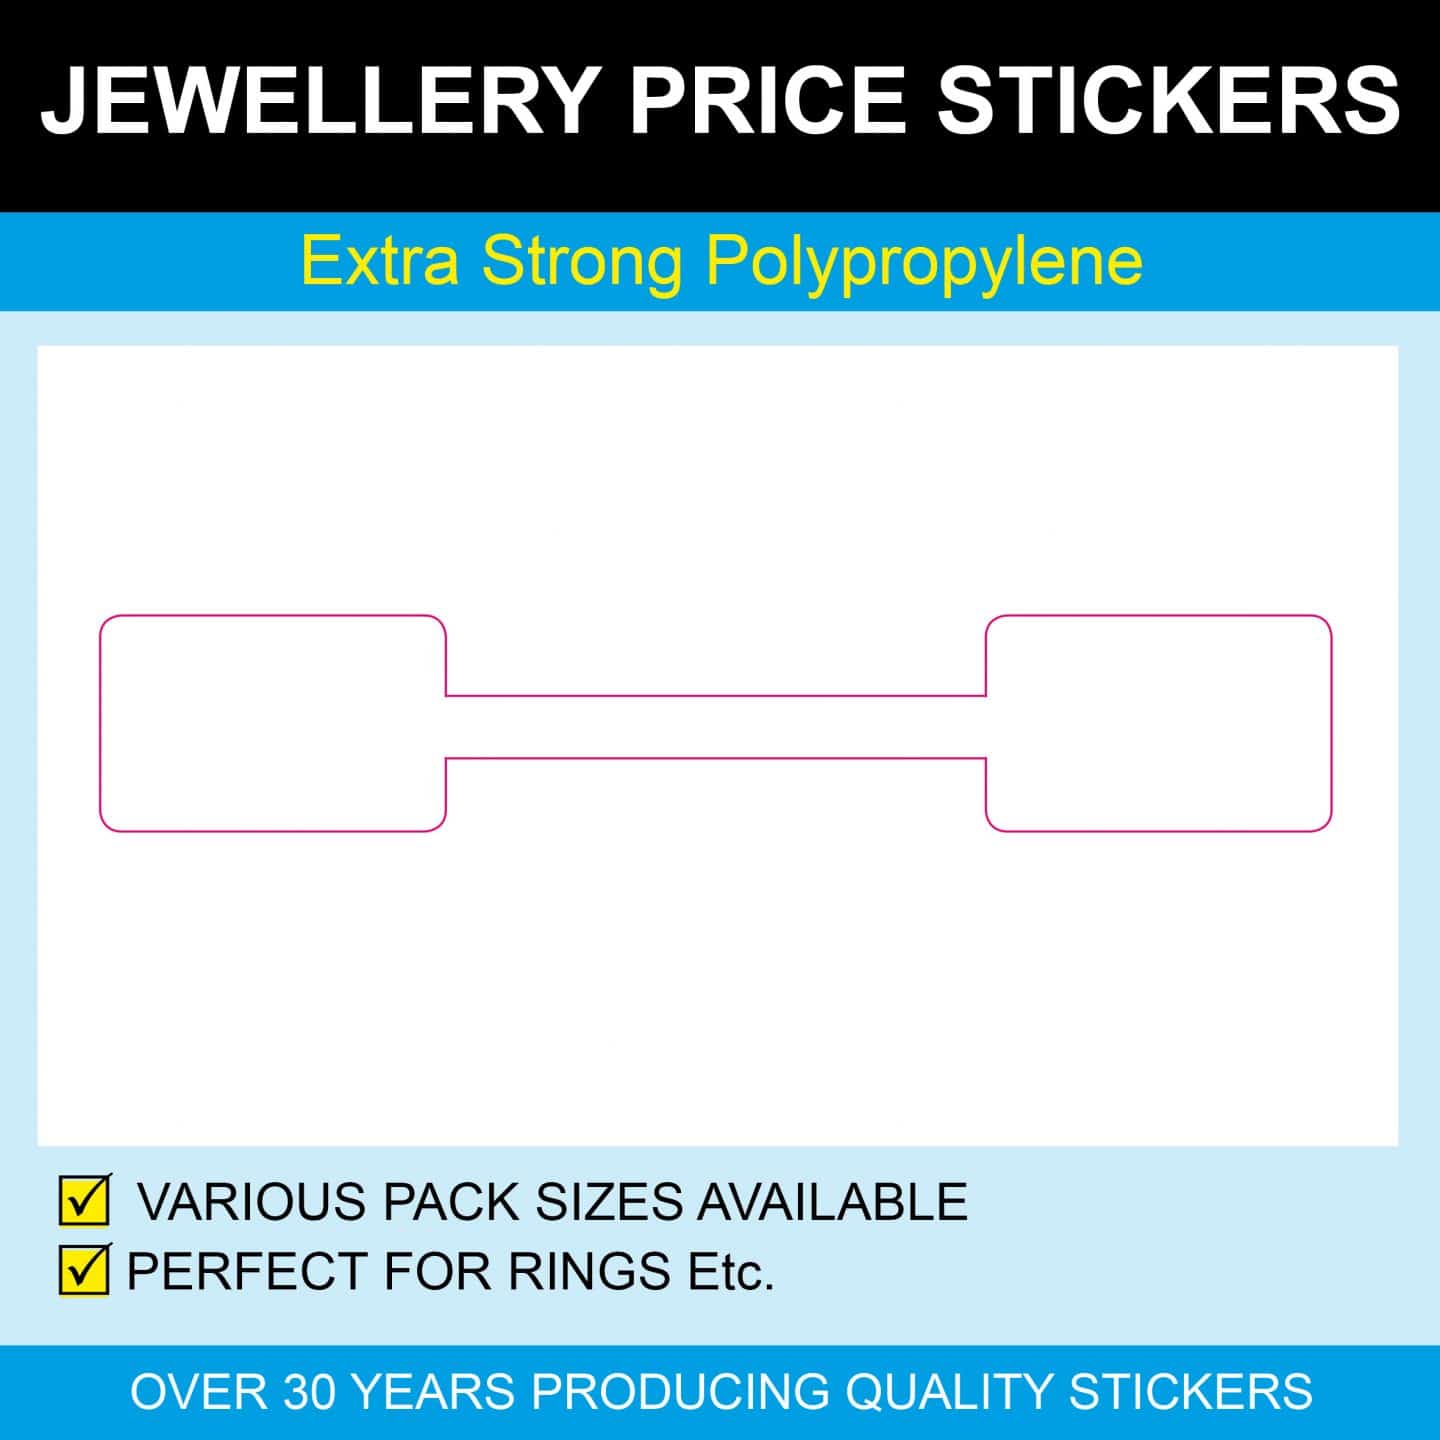 Extra Strong Polypropylene Jewellery Price Stickers